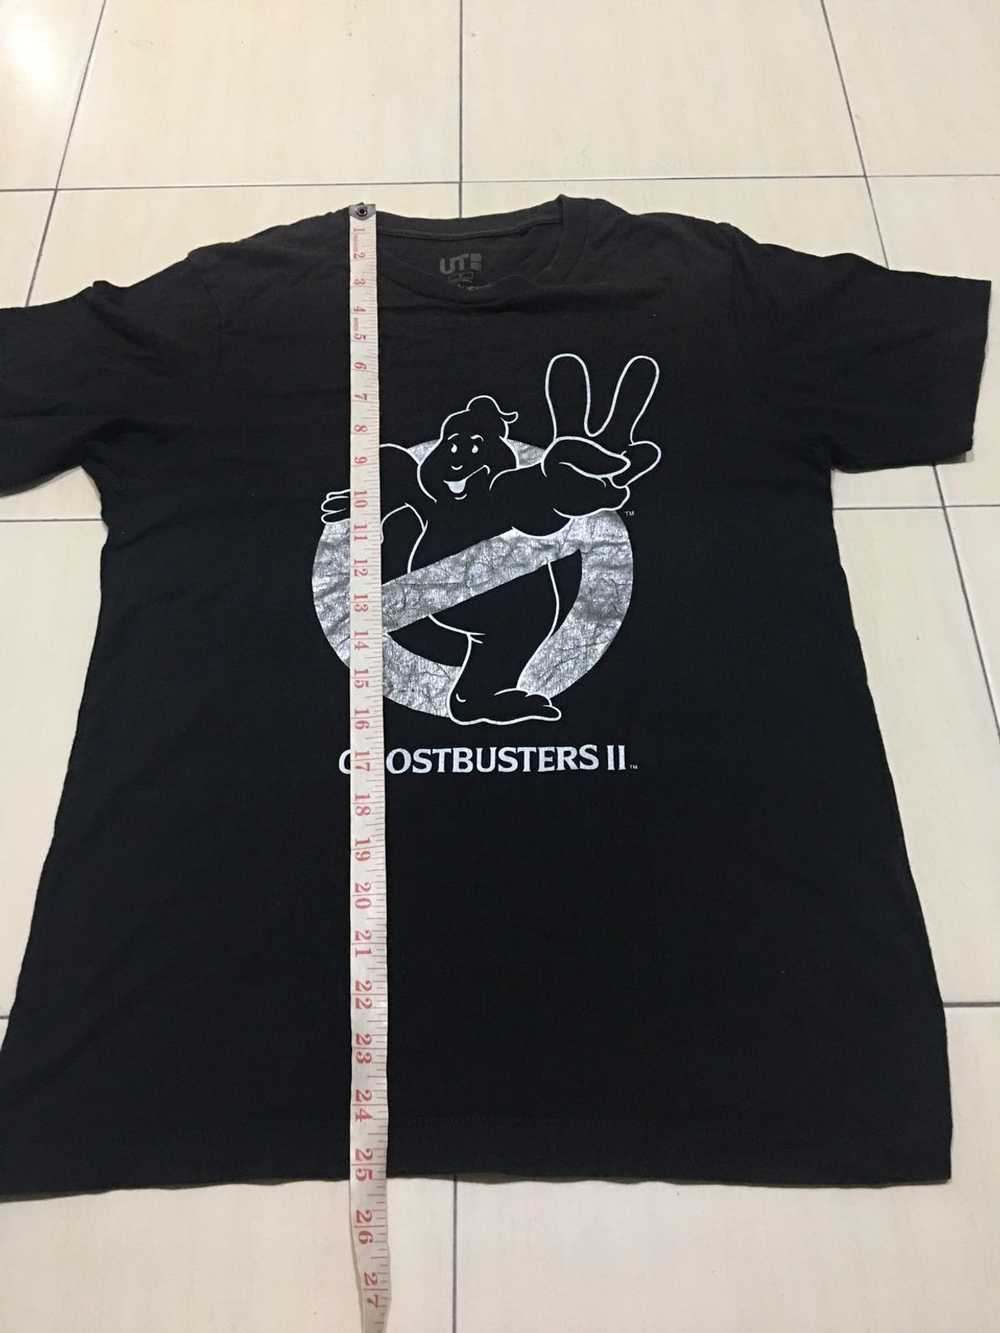 Uniqlo Ghostbusters 2 movie film promo shirt - image 8